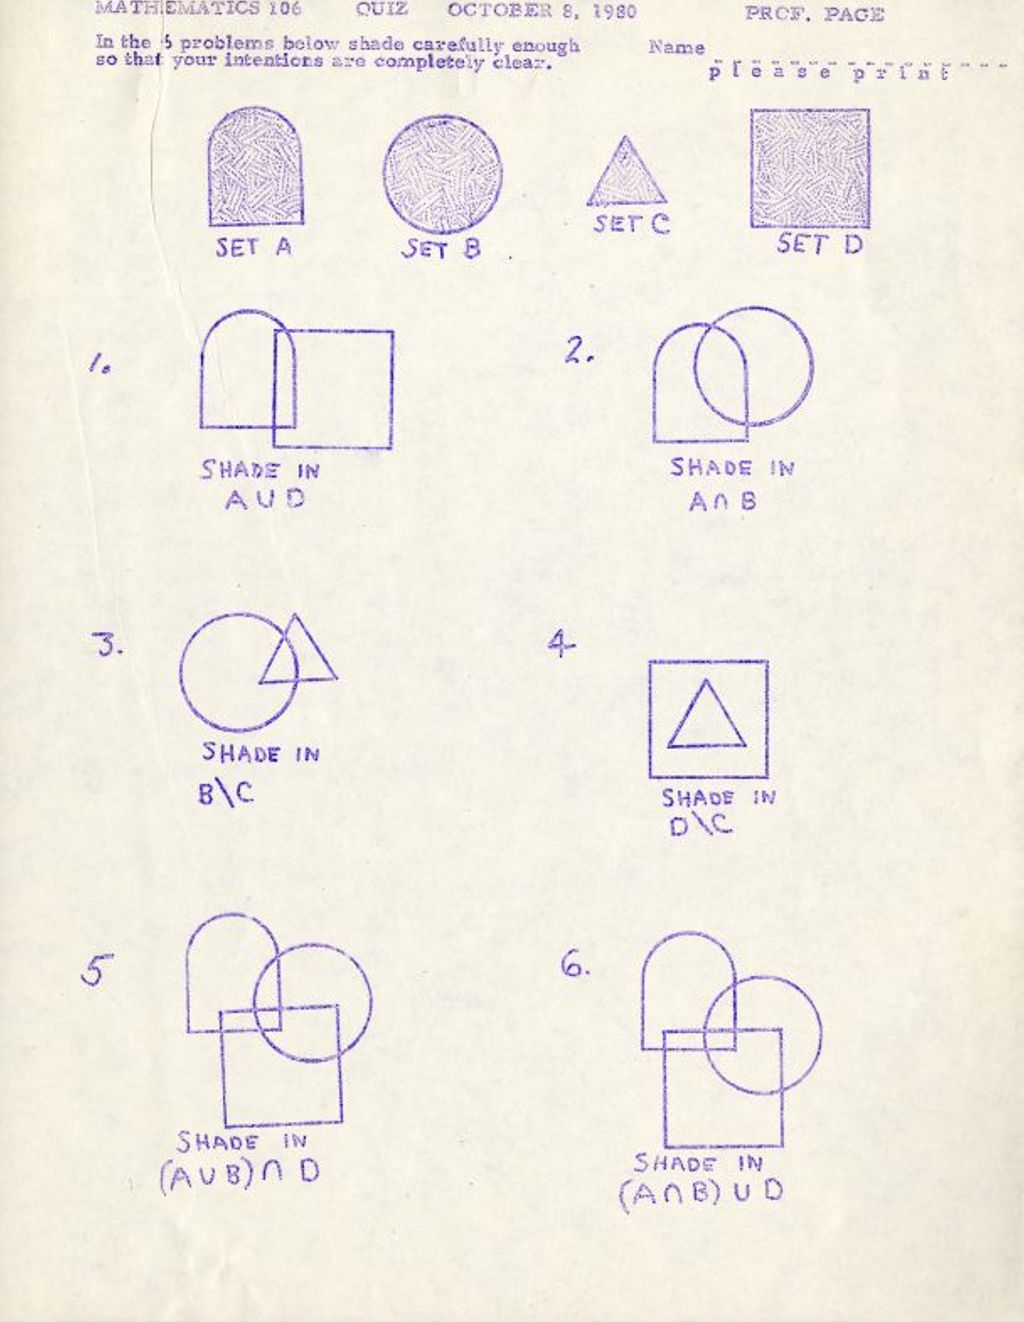 Miniature of Math 106 Quiz (October 1980) set